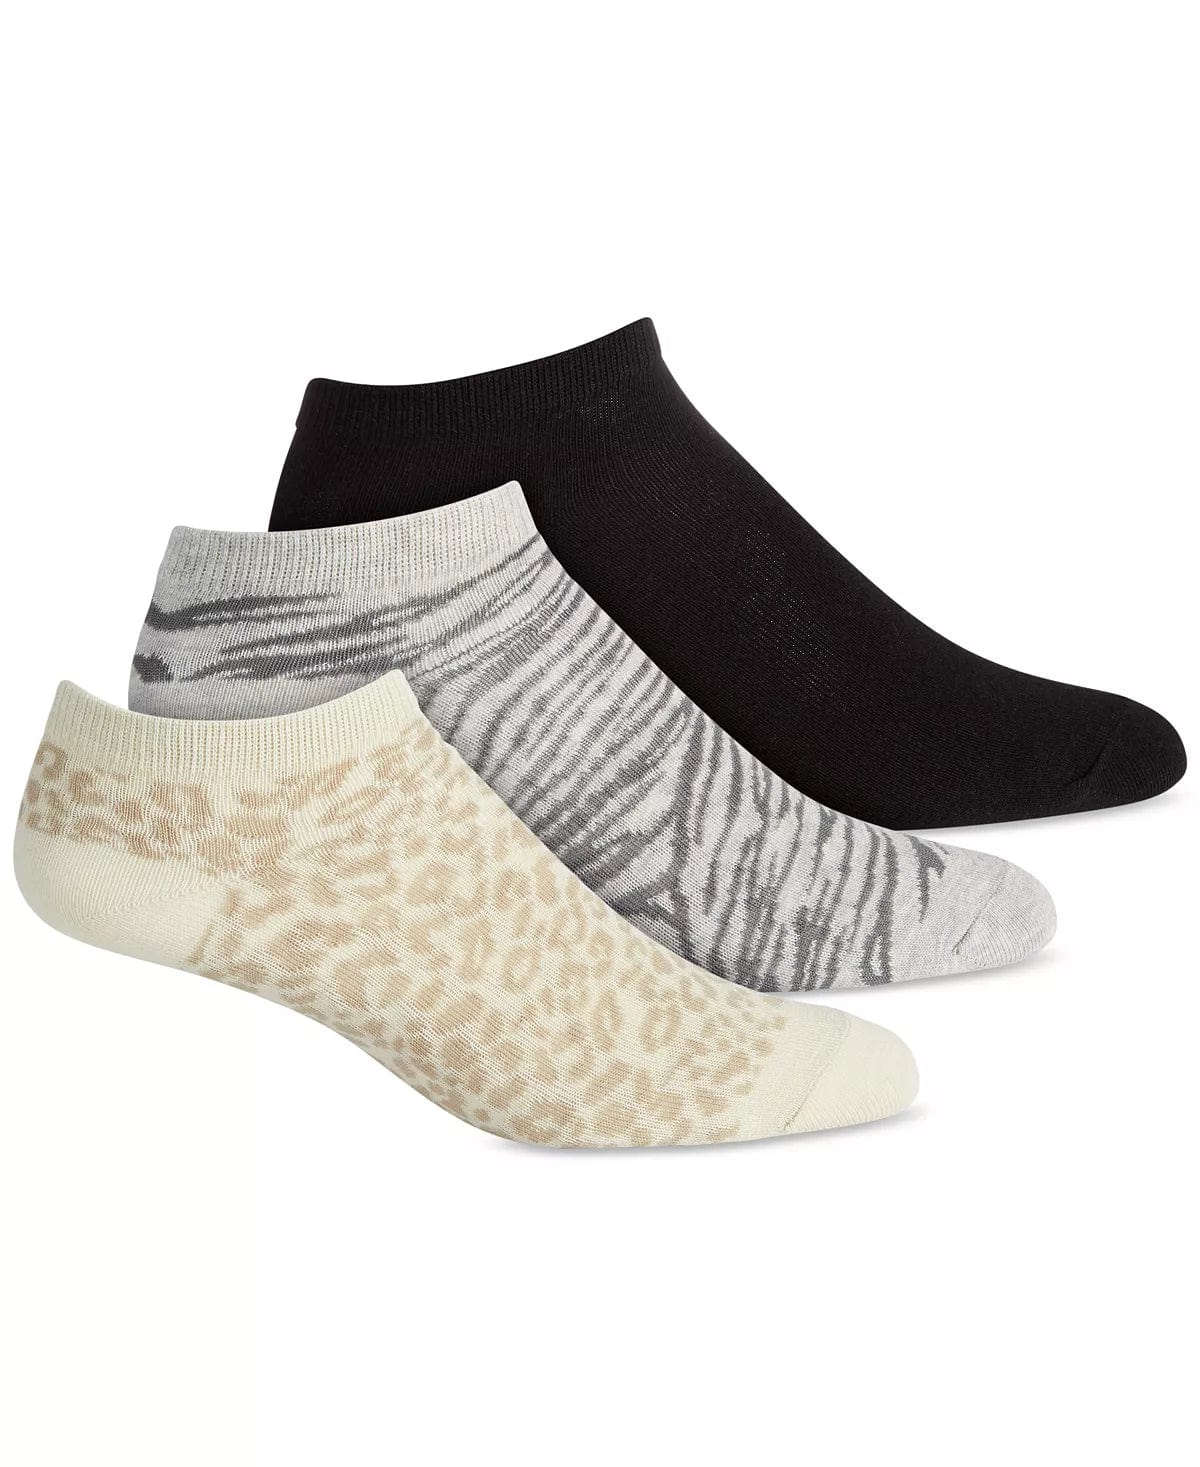 Women's No Show Socks Jenni 3pr Animal Print Super Soft Neutral Colors